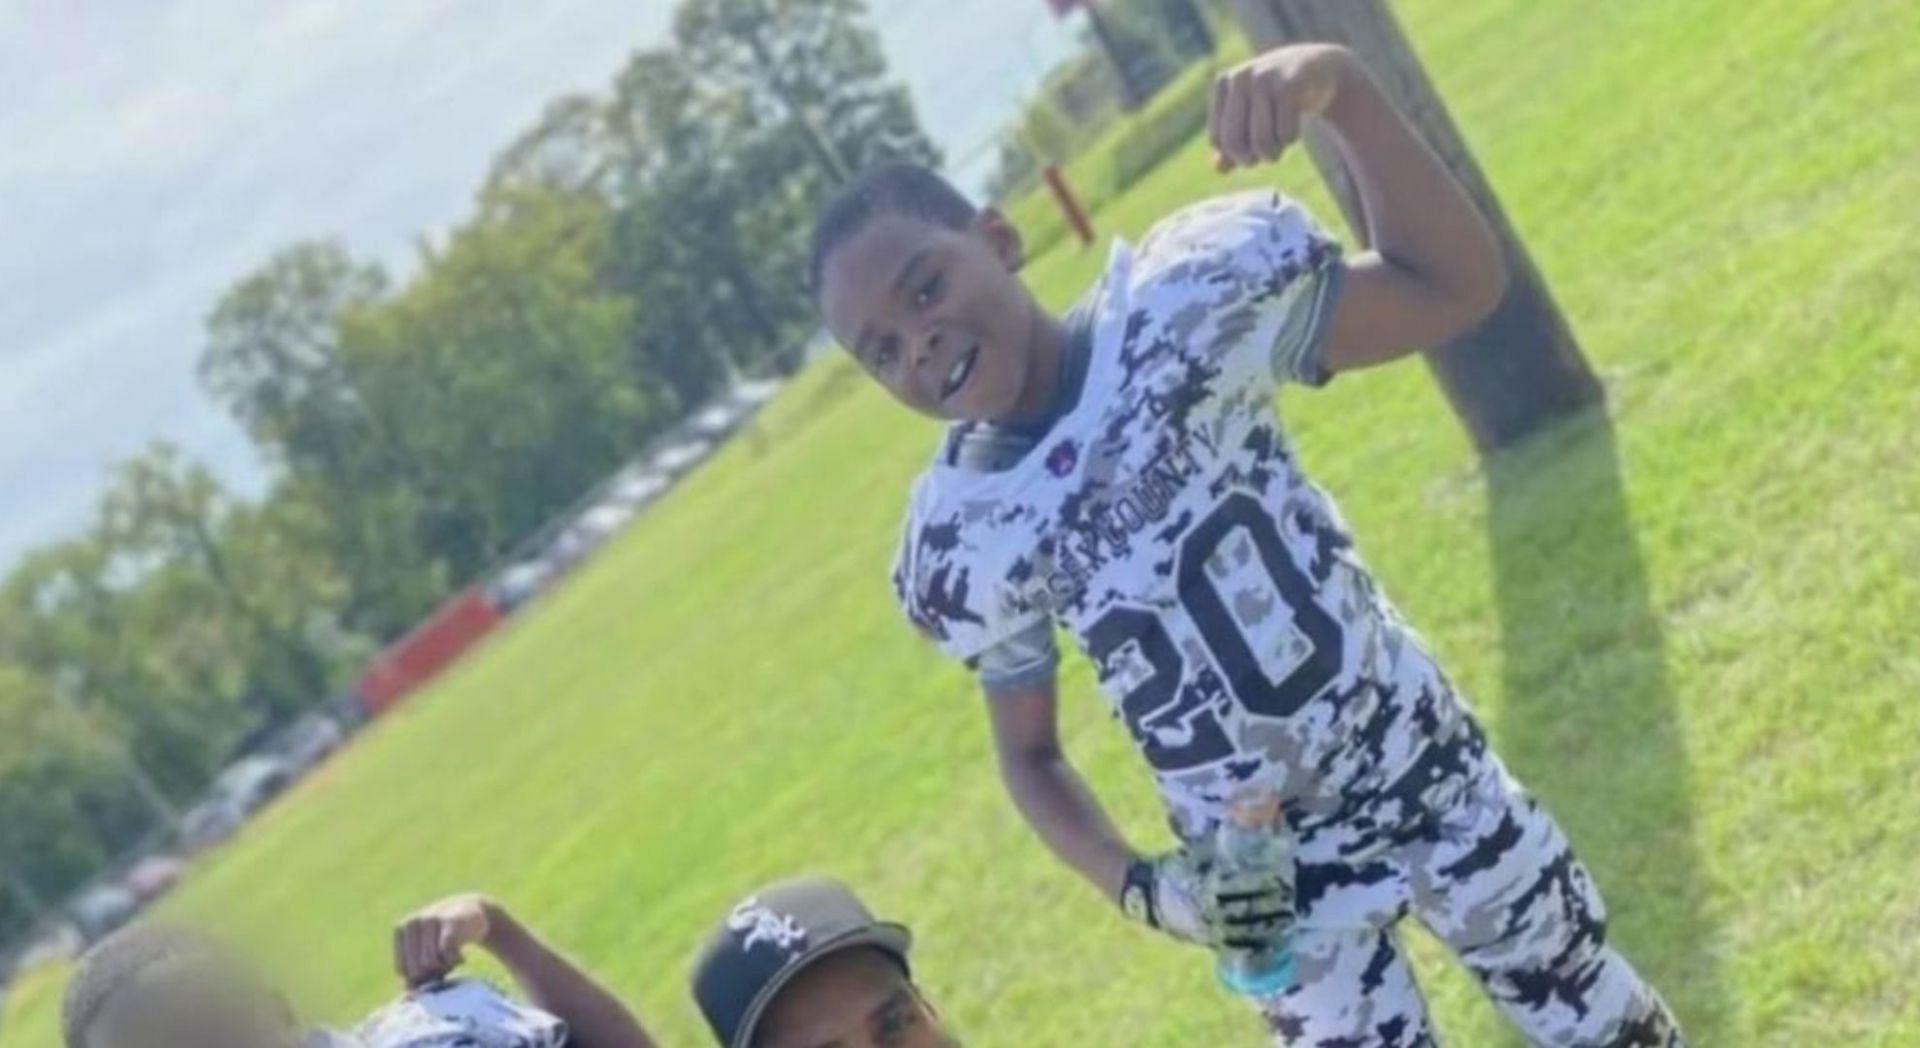 12 year old Elijah Jordan Brown Garcia&#039;s sudden death sparked vaccination fears online (Image via @/ChanceGardi/Twitter)